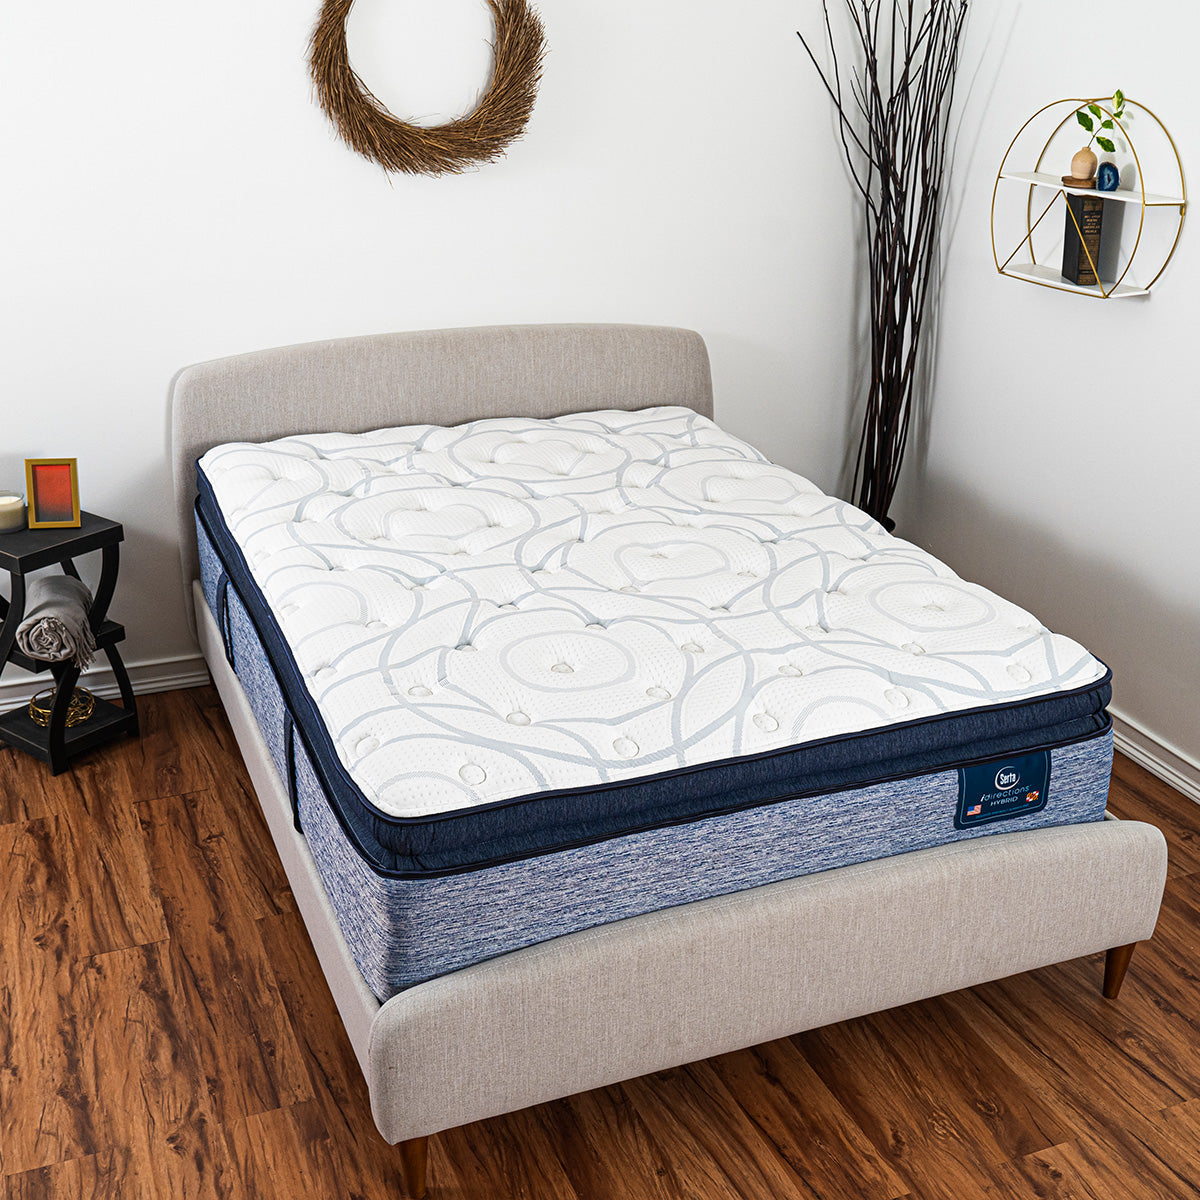 Floor Model In Store Only - Serta iDirections x8 Hybrid II Pillow Top Mattress